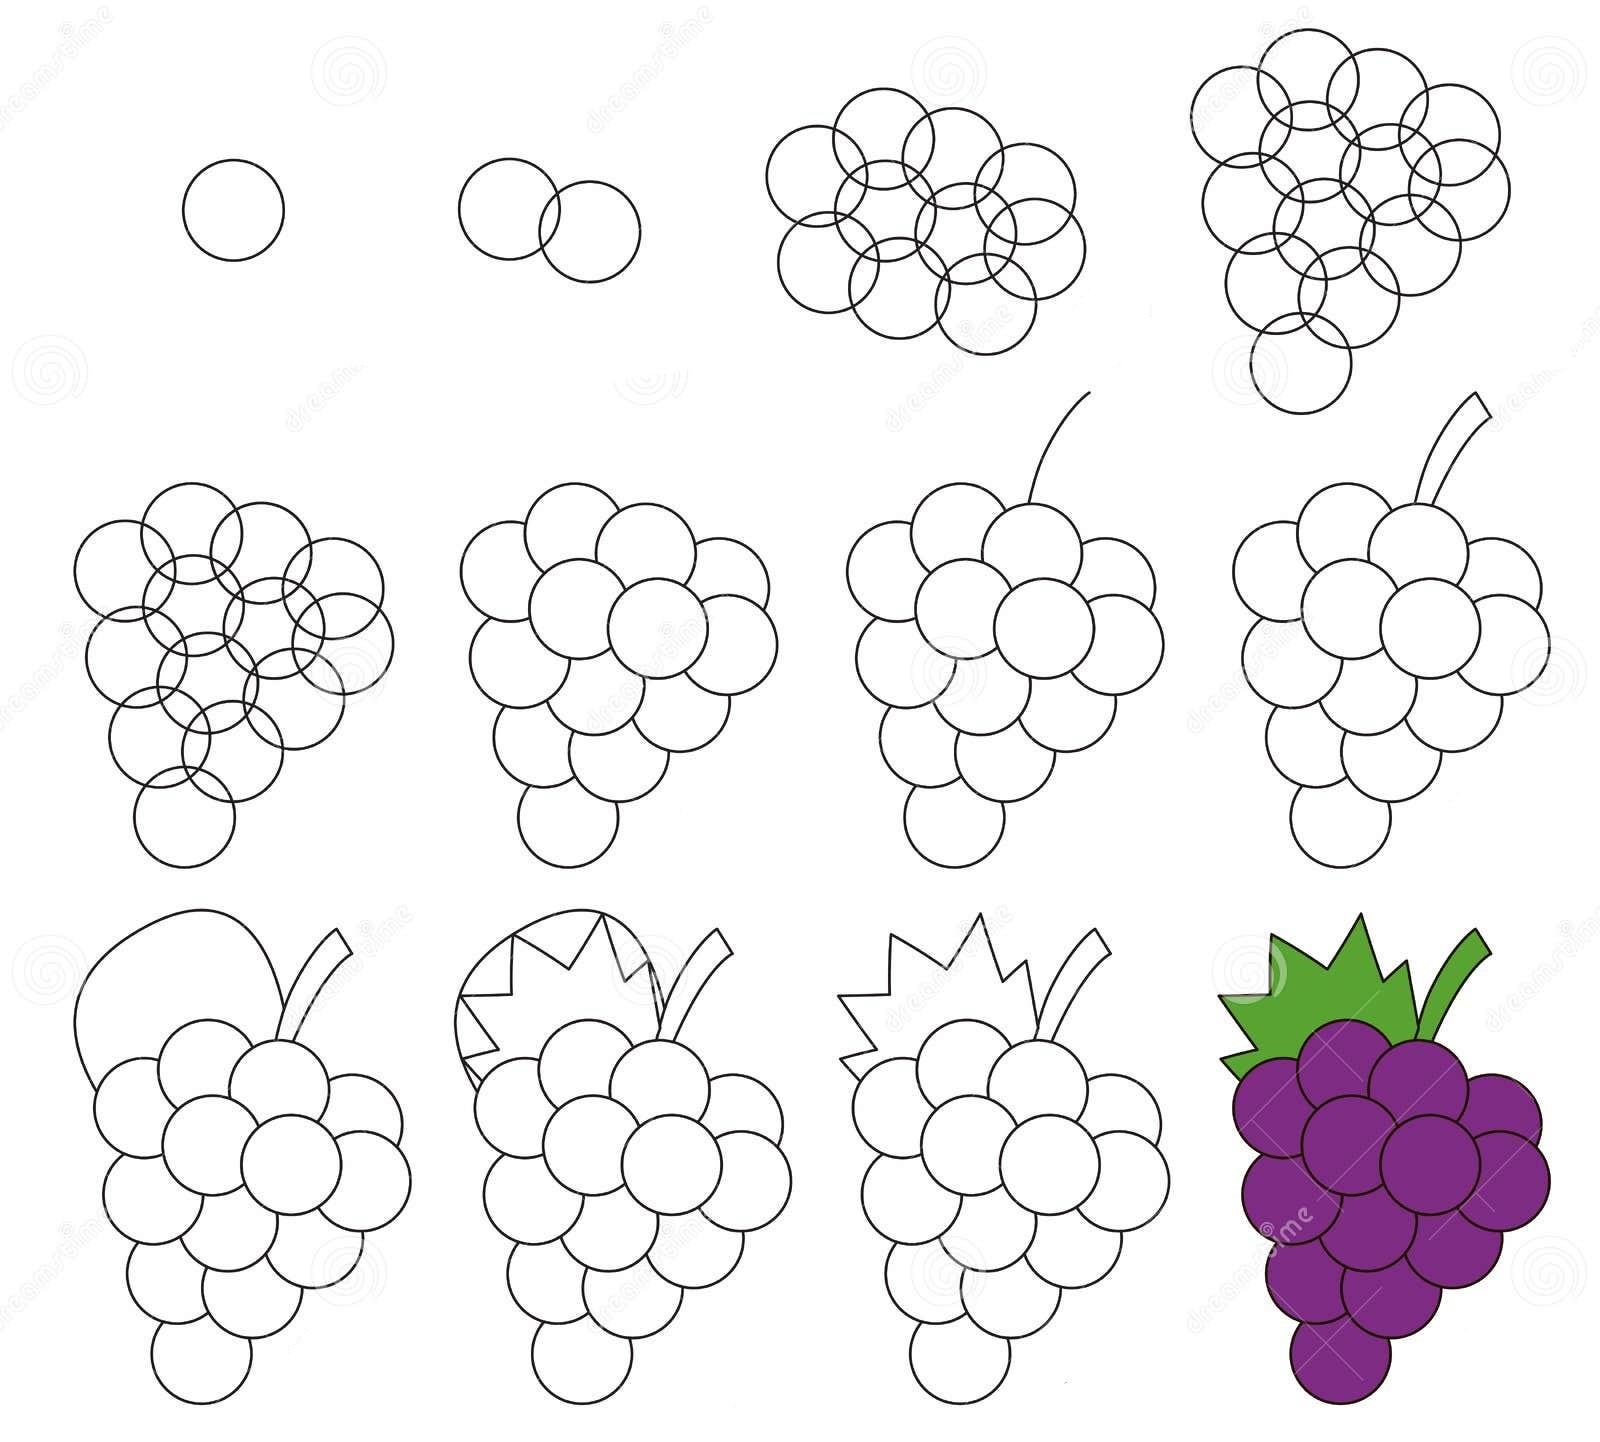 Idea viinirypäleterttuja (8) piirustus